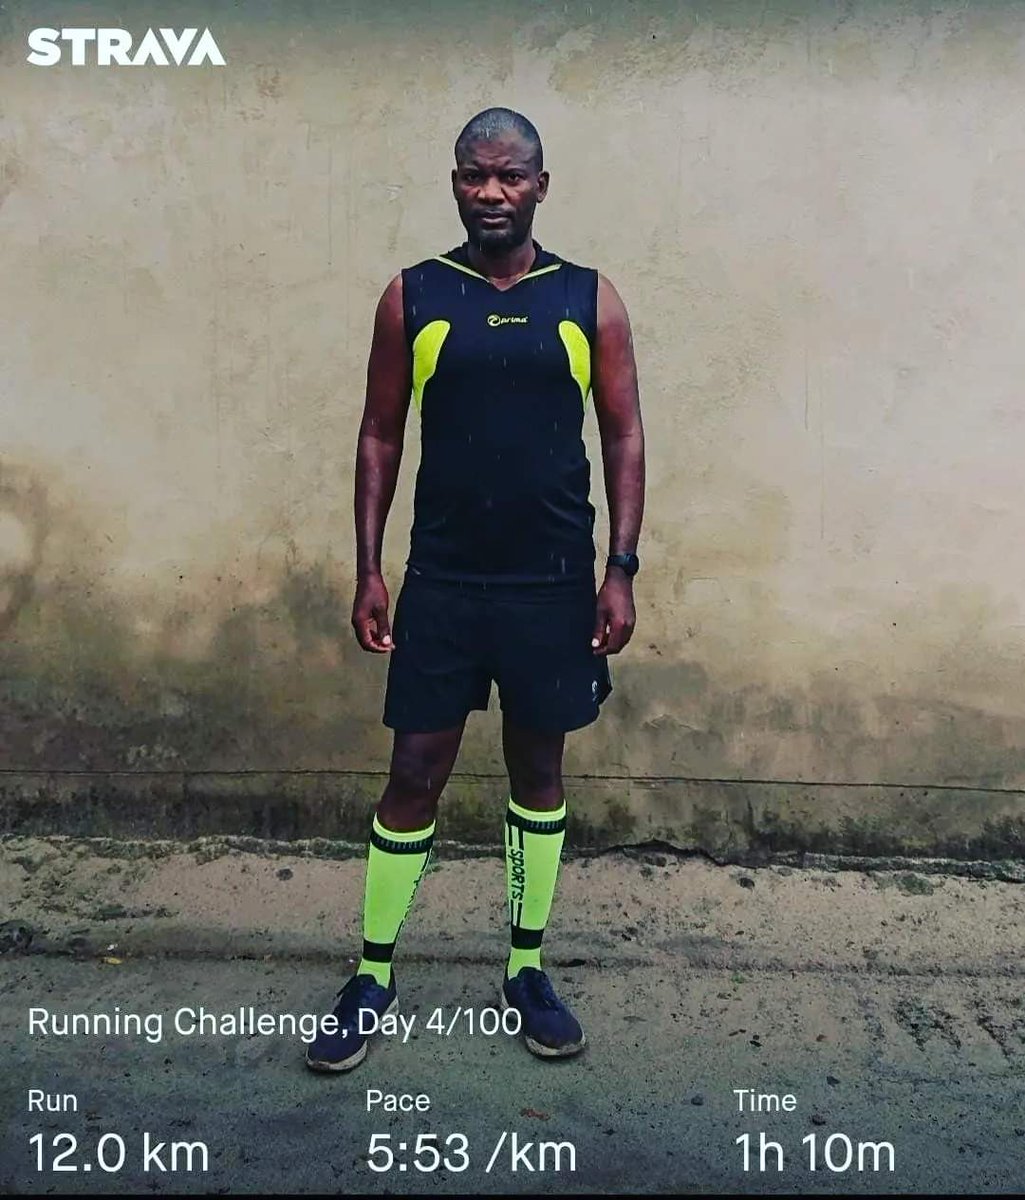 Running Challenge, Day 4/100
@TOTRunners

#100daysofrunning
#fetchyourbody2024
#grateful
#sylvarunner